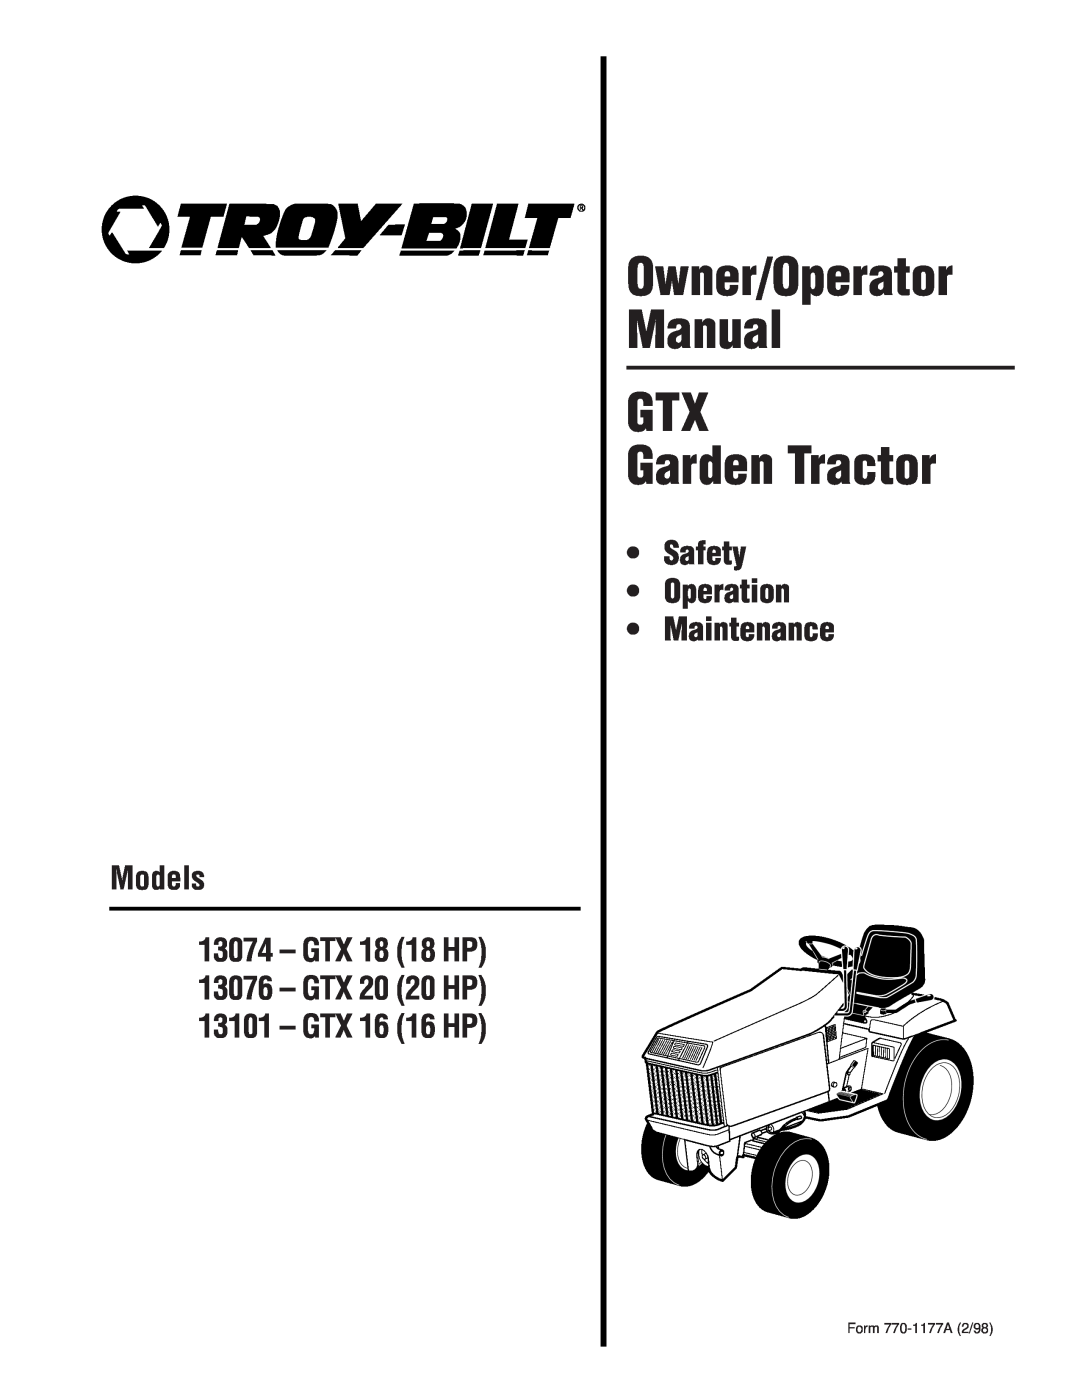 Troy-Bilt manual Models 13074 - GTX 18 18 HP 13076 - GTX 20 20 HP 13101 - GTX 16 16 HP, Safety Operation Maintenance 